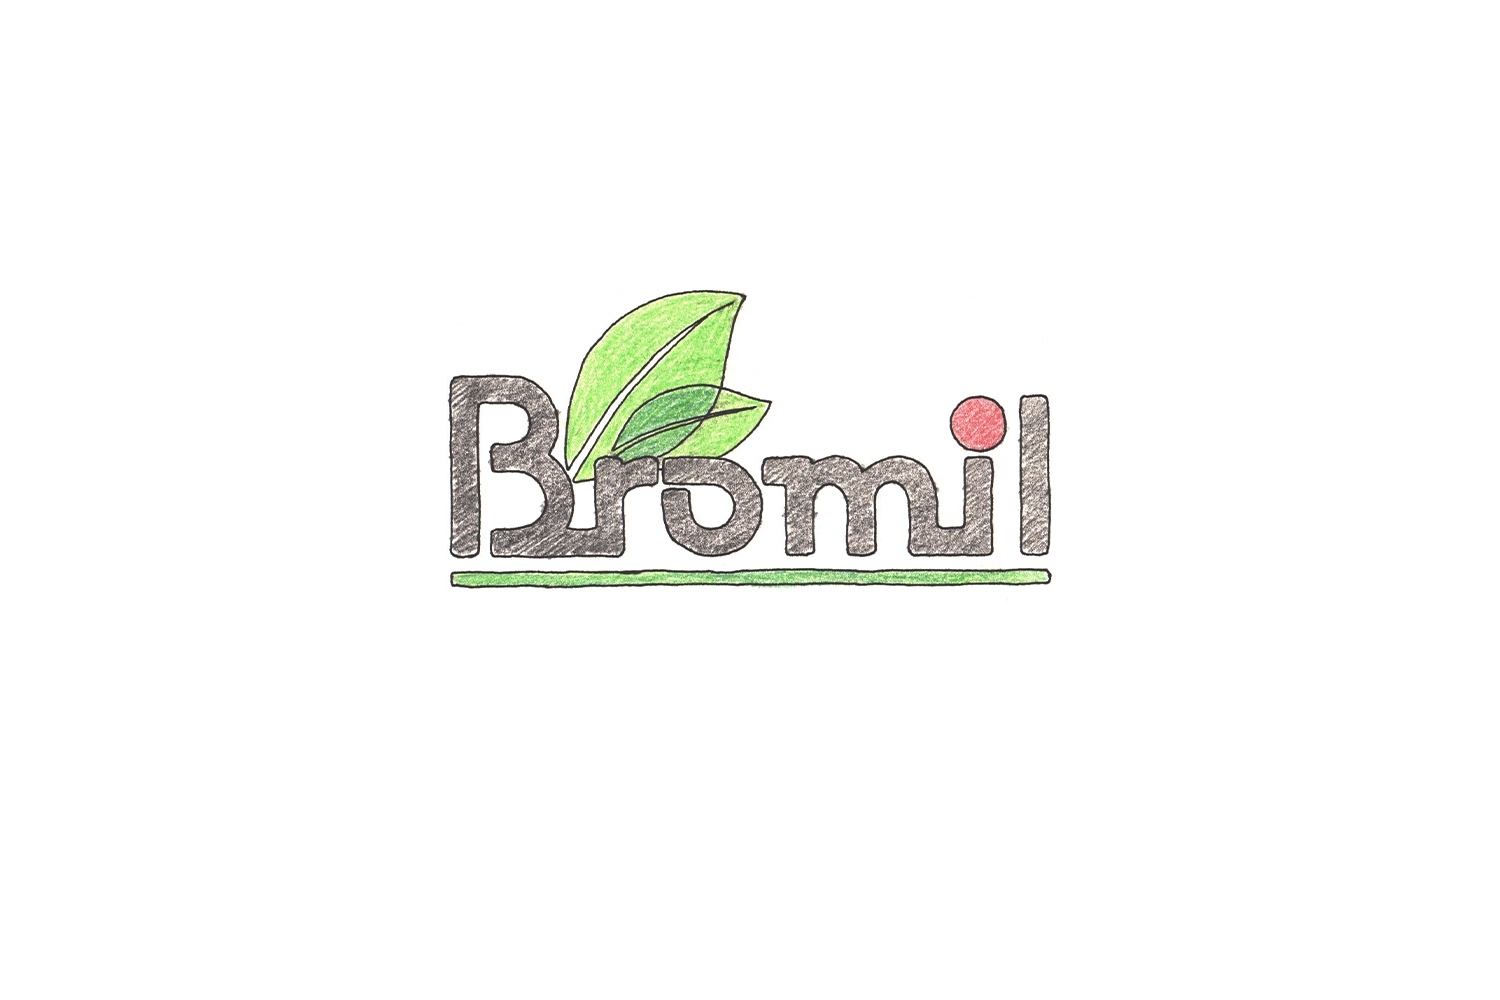 Bromil logo colour pencil sketch